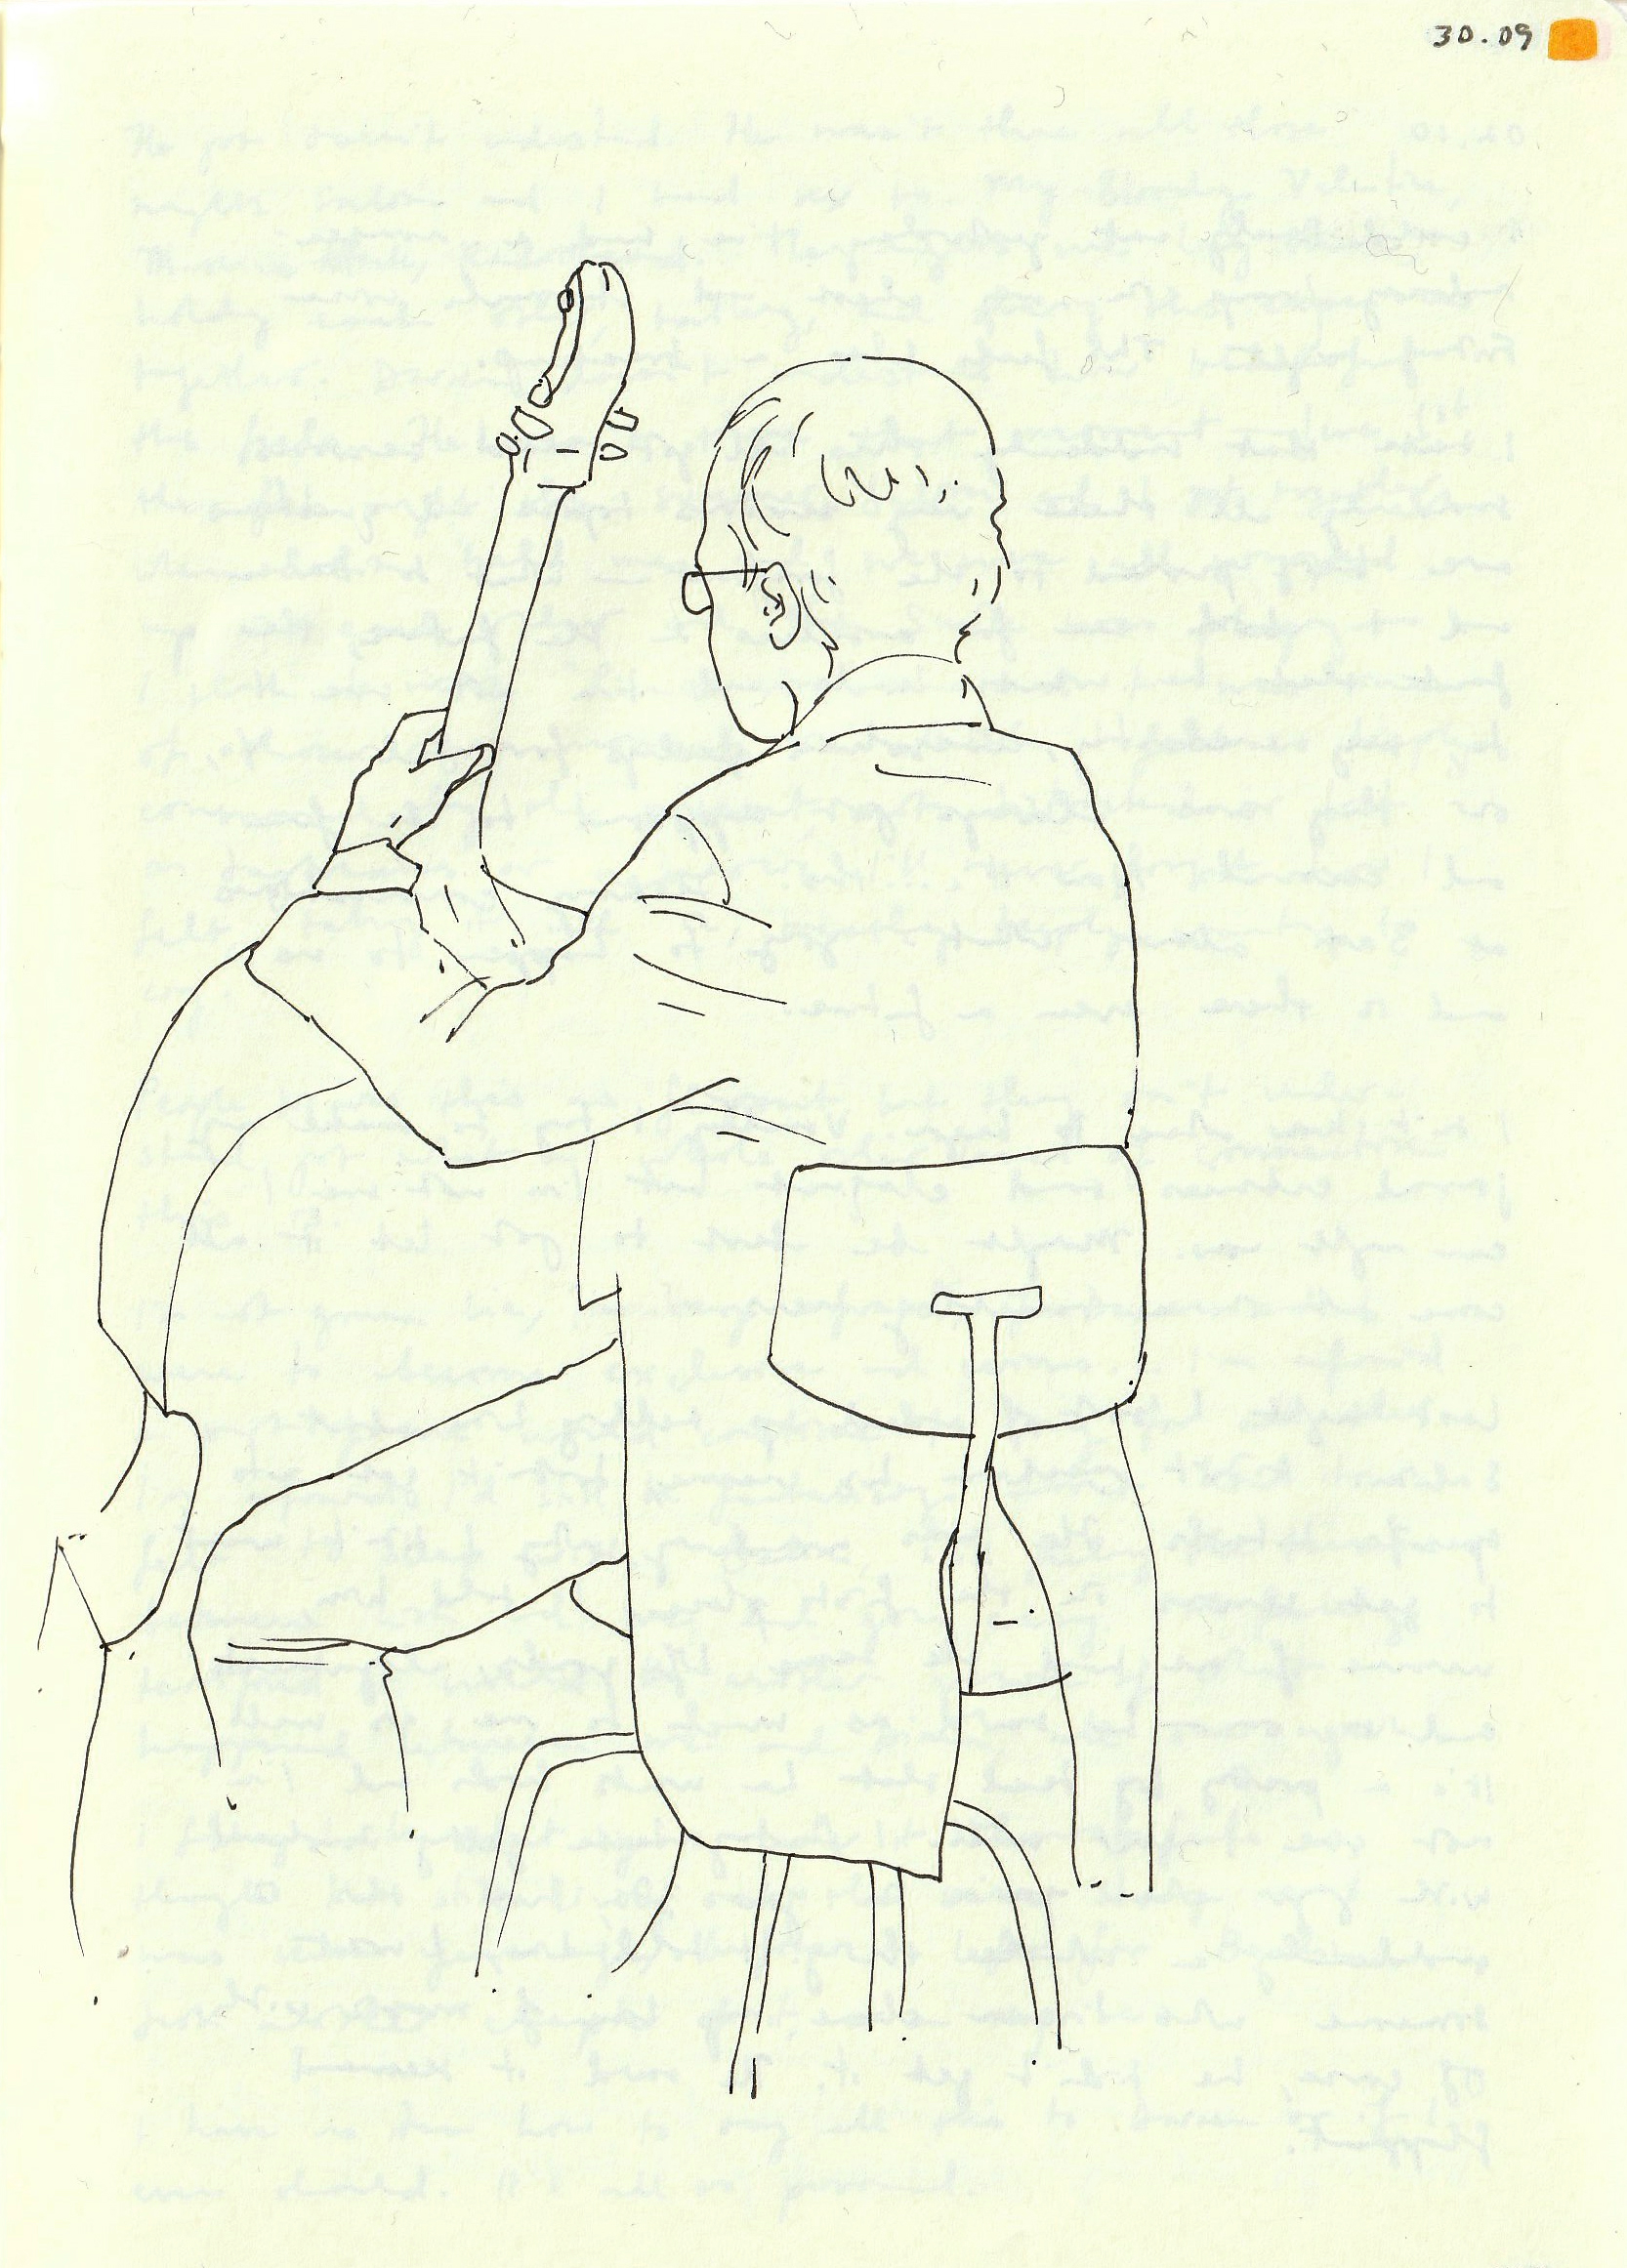 Ariel Cotton drawing sketchbook